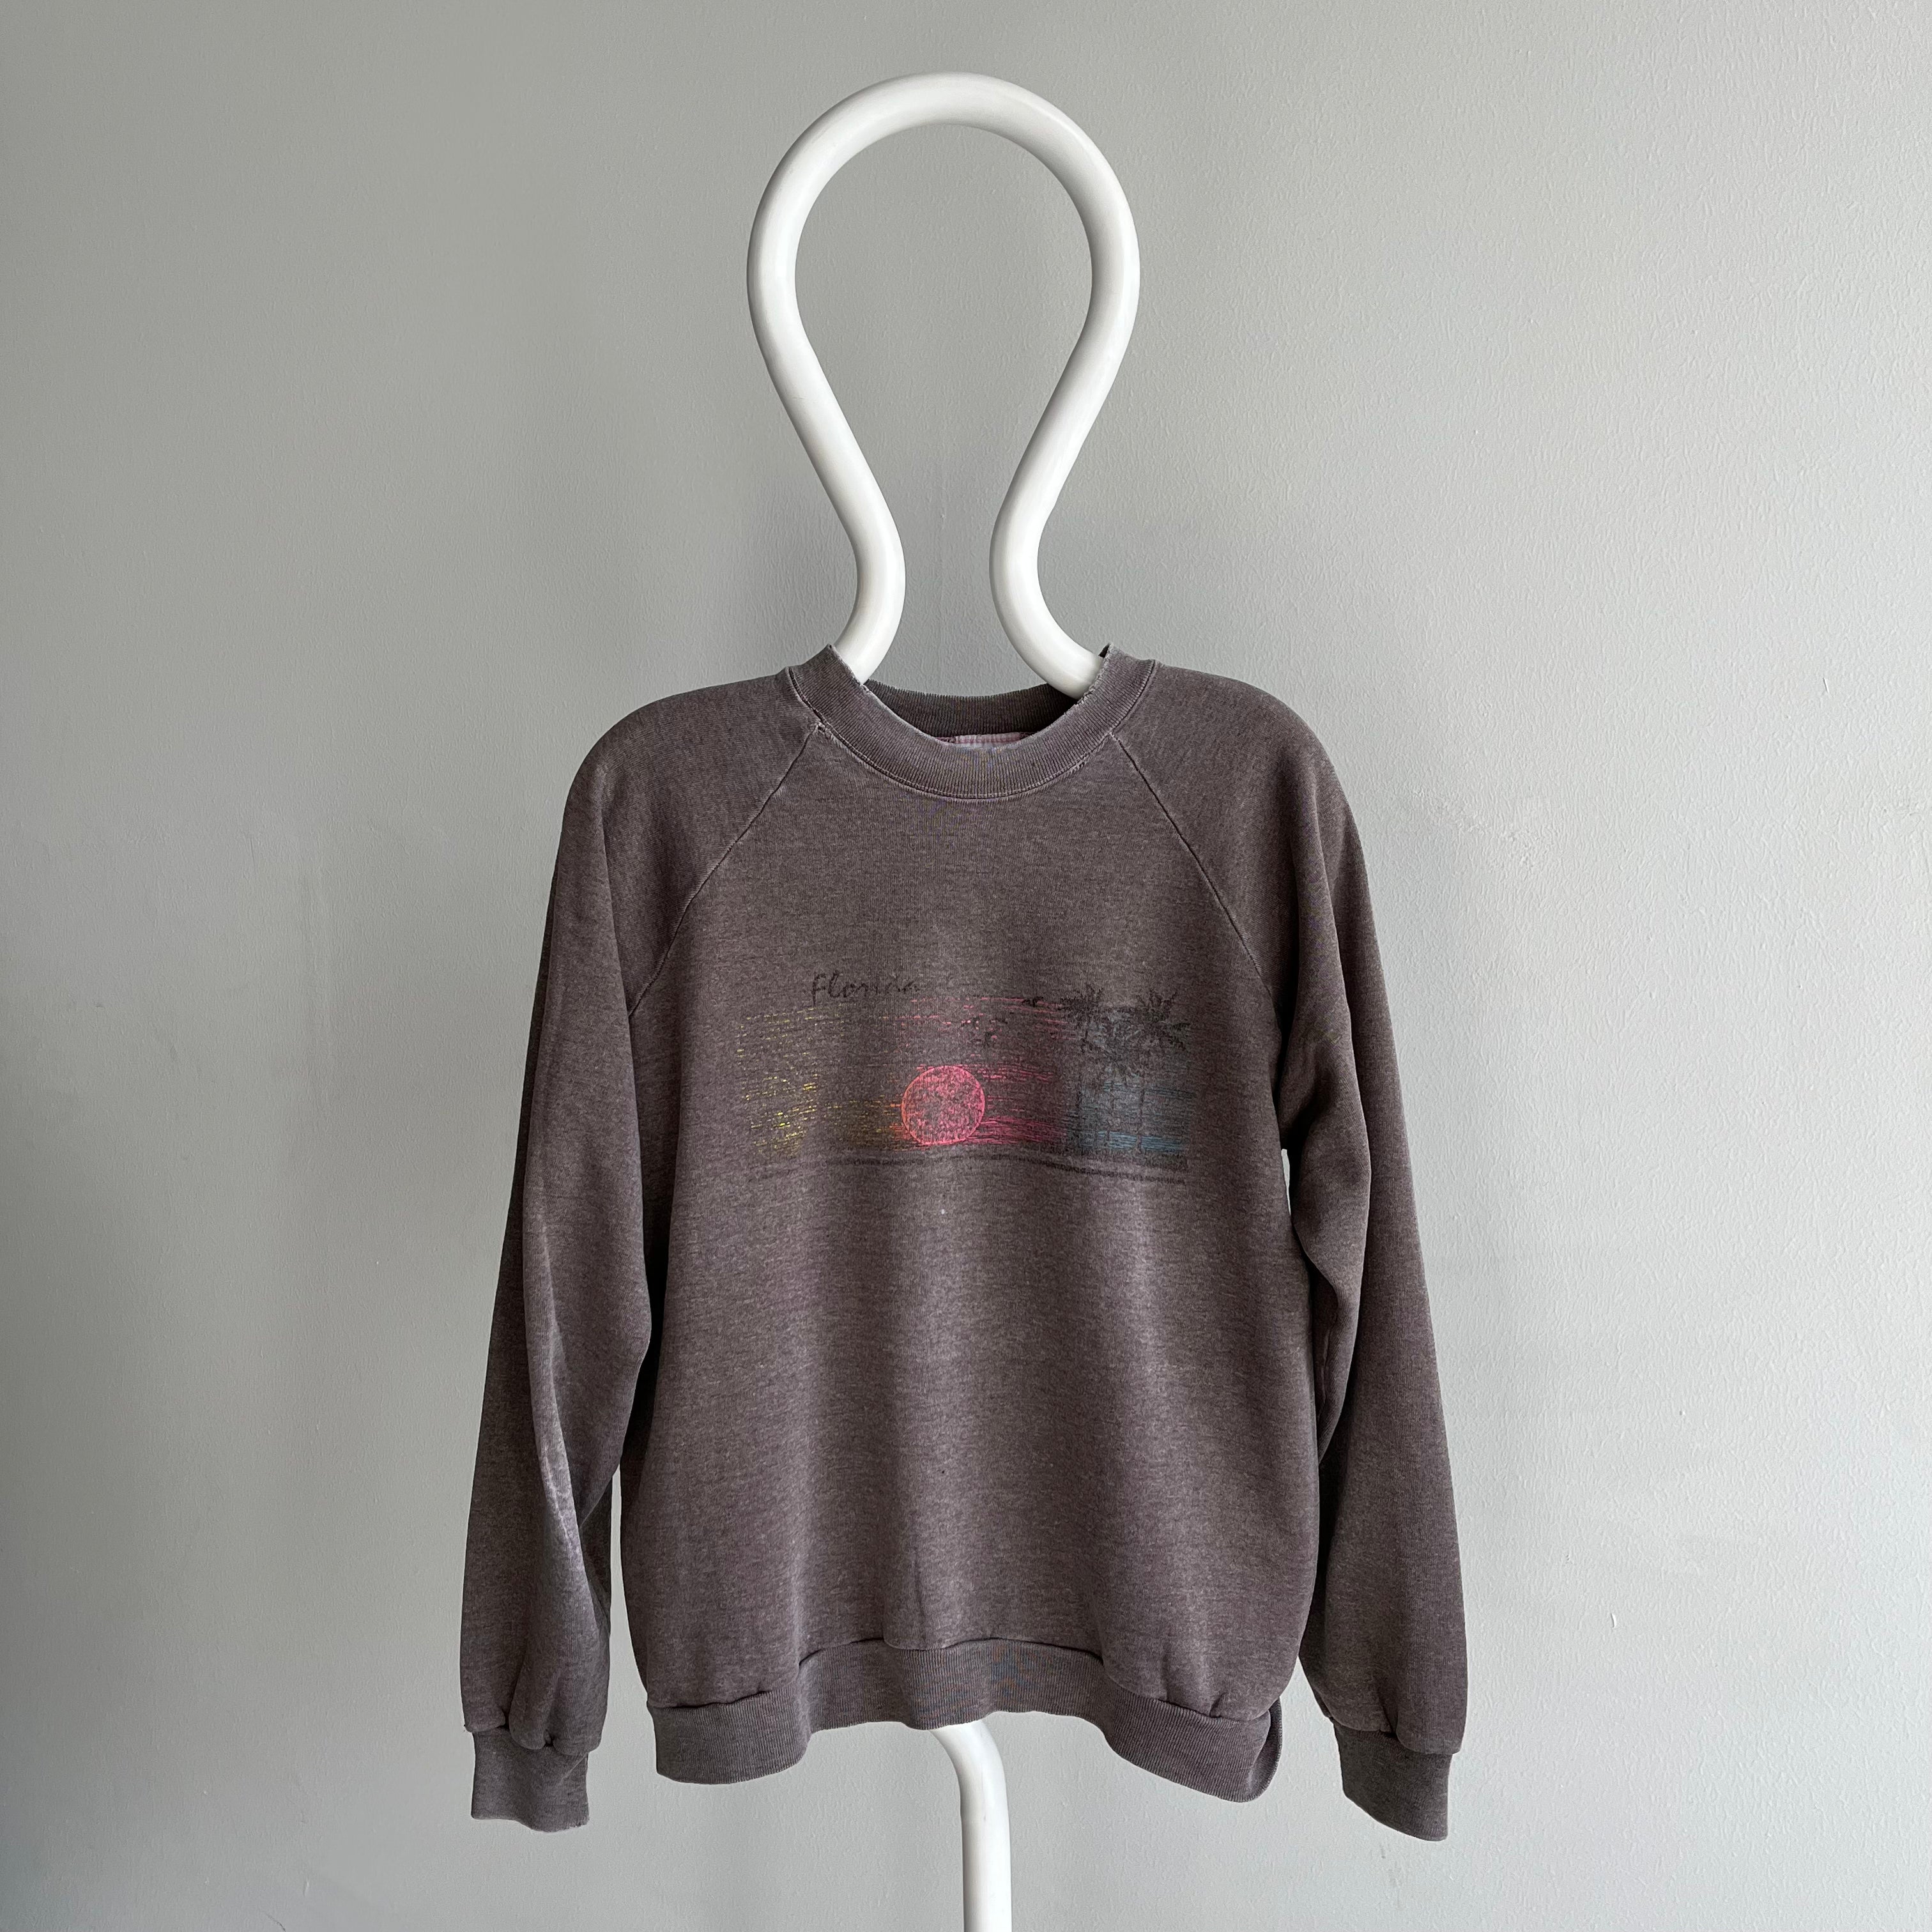 1980s Super Faded Florida Bronze/Gray/Brown Slouchy Worn Sweatshirt